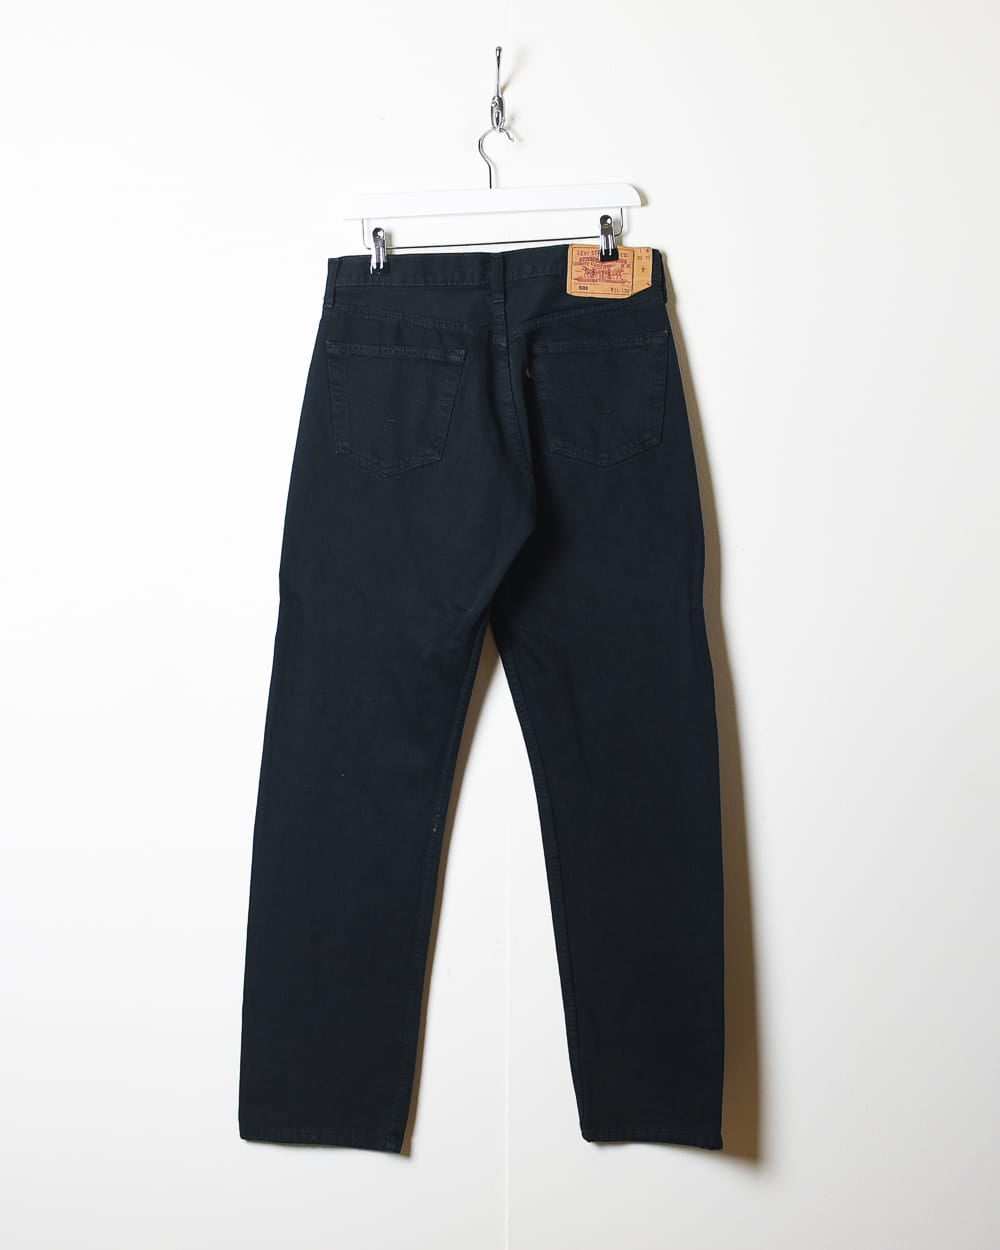 Black Levi's 501 Jeans - W32 L32